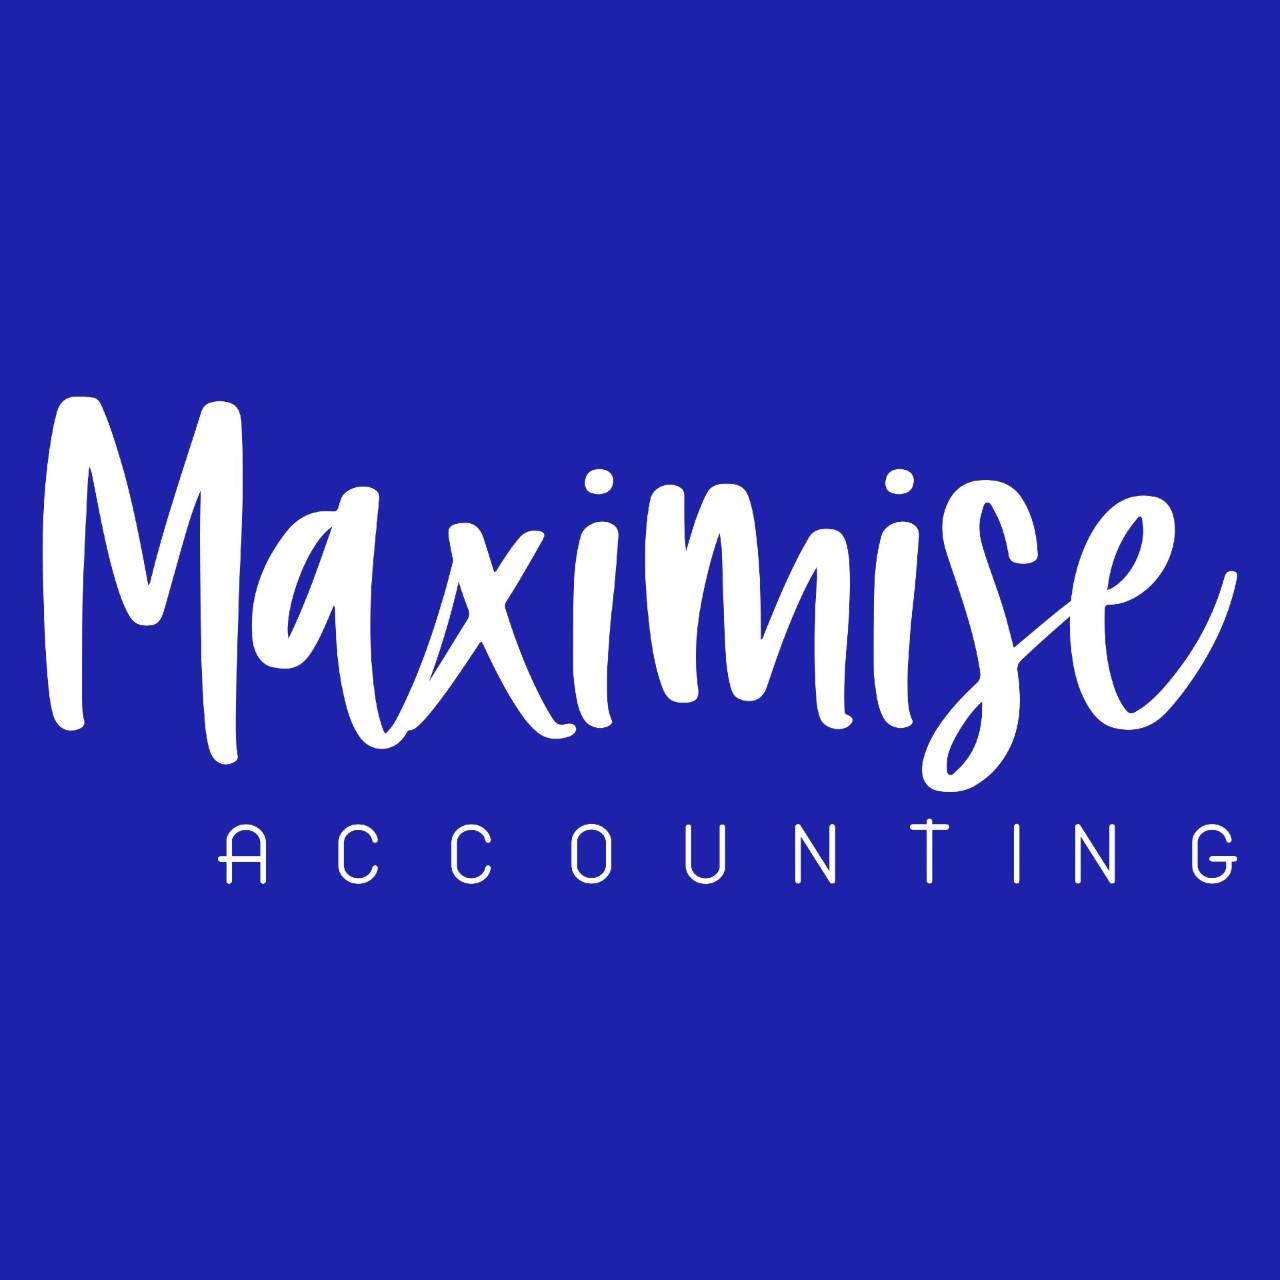 Maximise Accounting